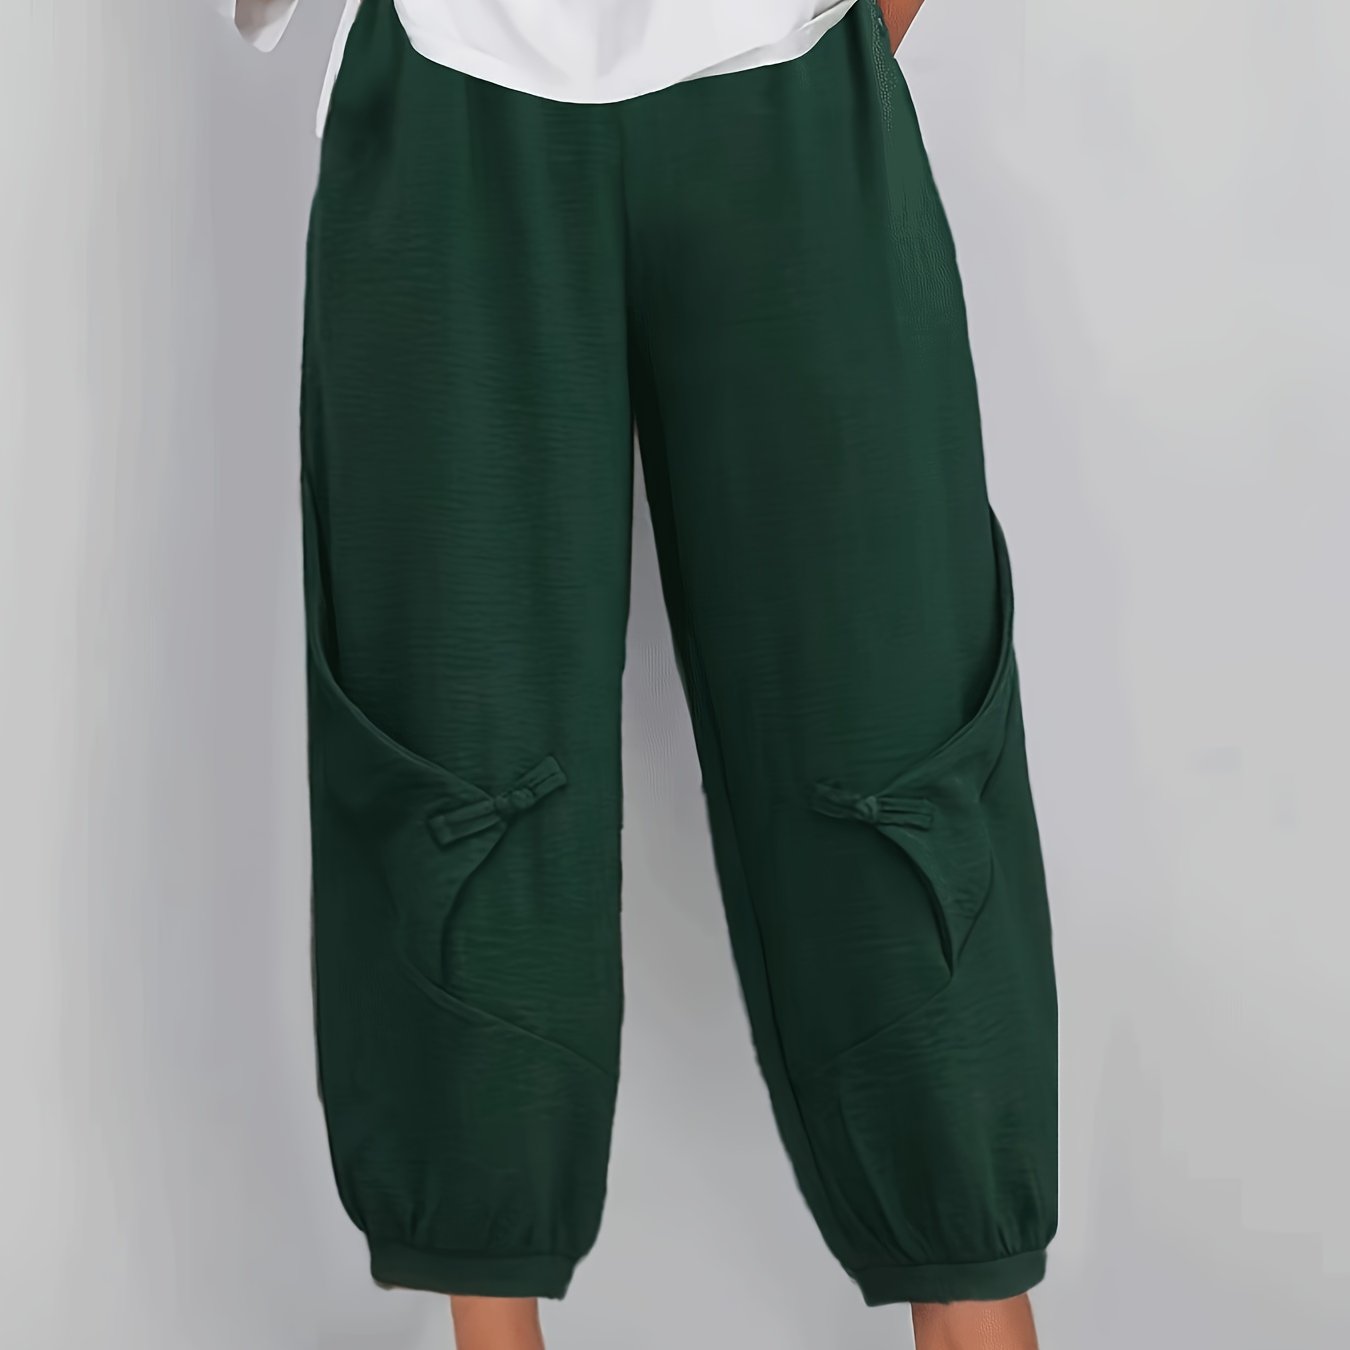 Women for Pants - Elastic Waist Slant Pocket Carrot Pants (Color